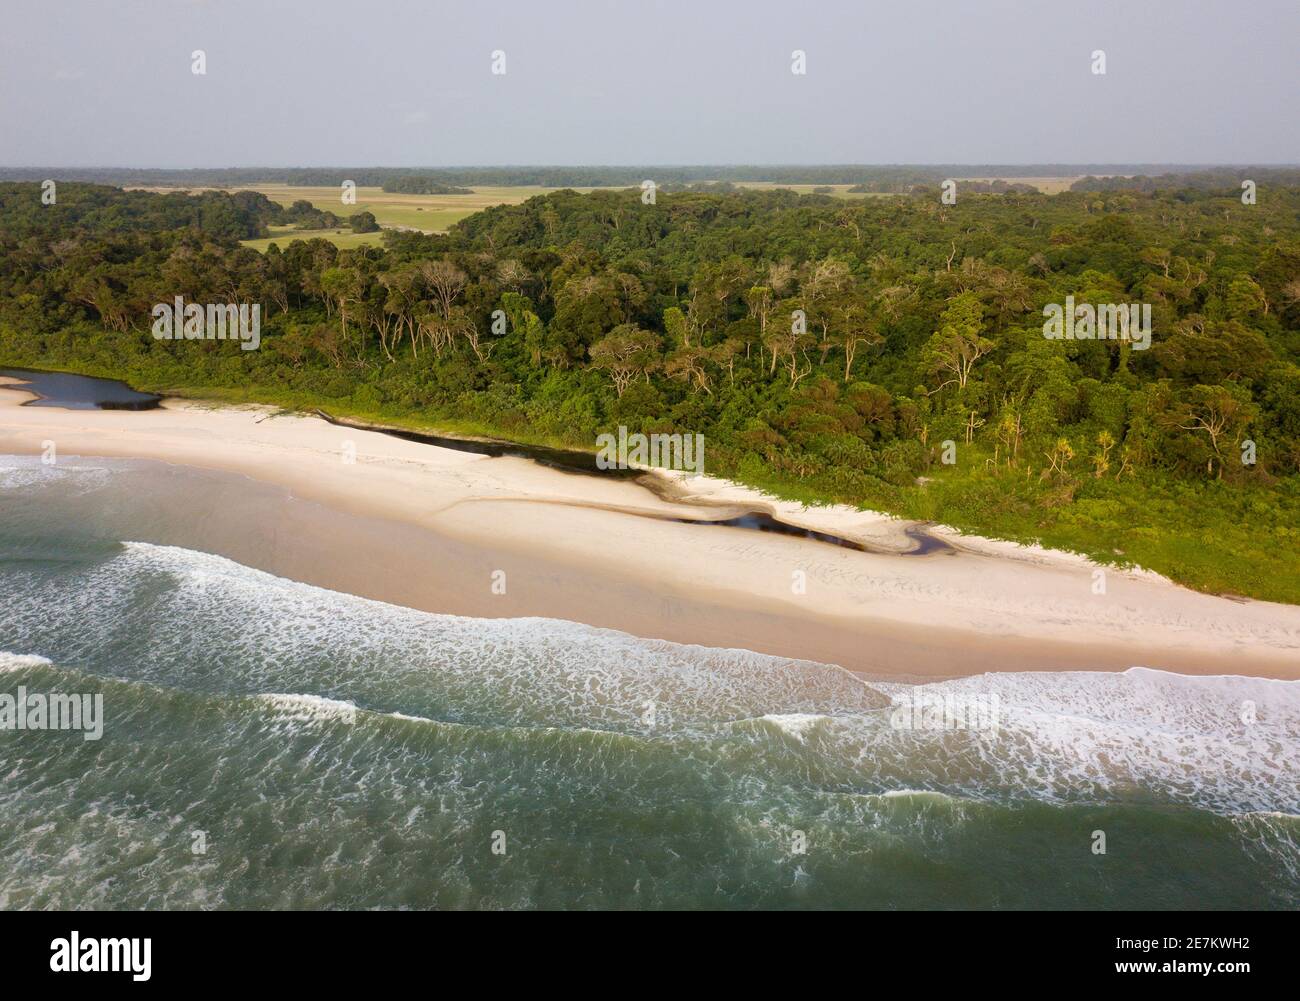 Playa y selva tropical, cerca de Omboue, Gabón, África central Foto de stock